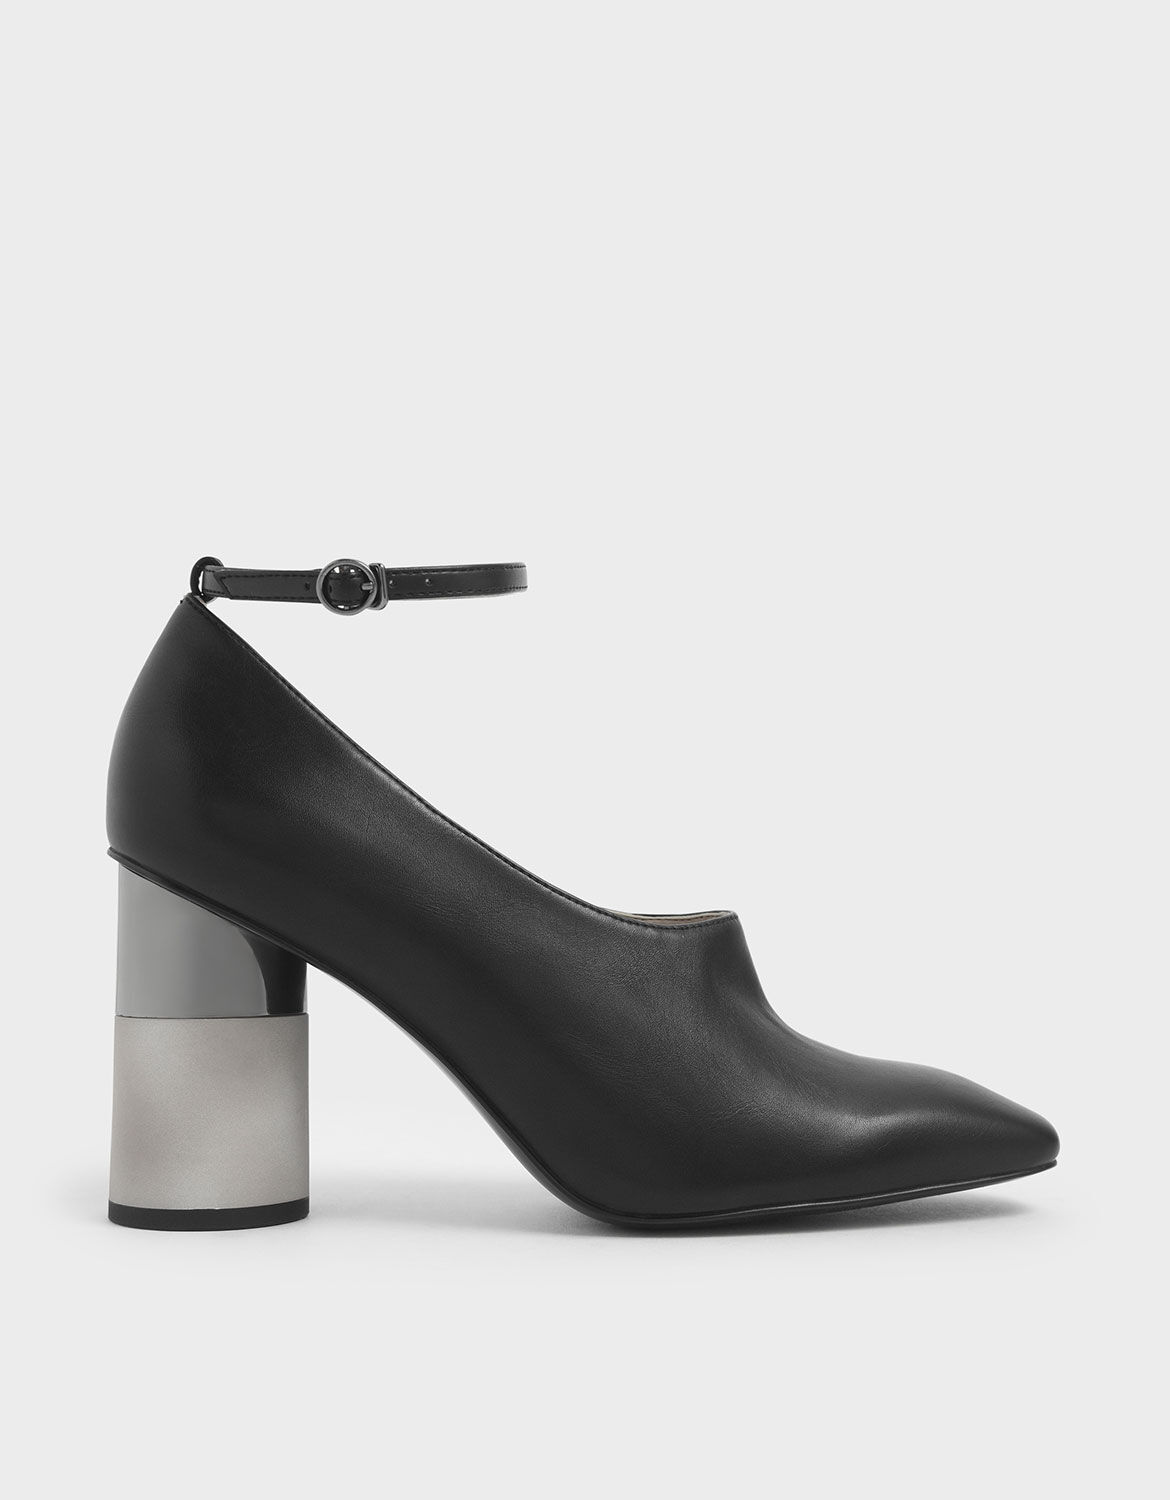 black pump heels with strap